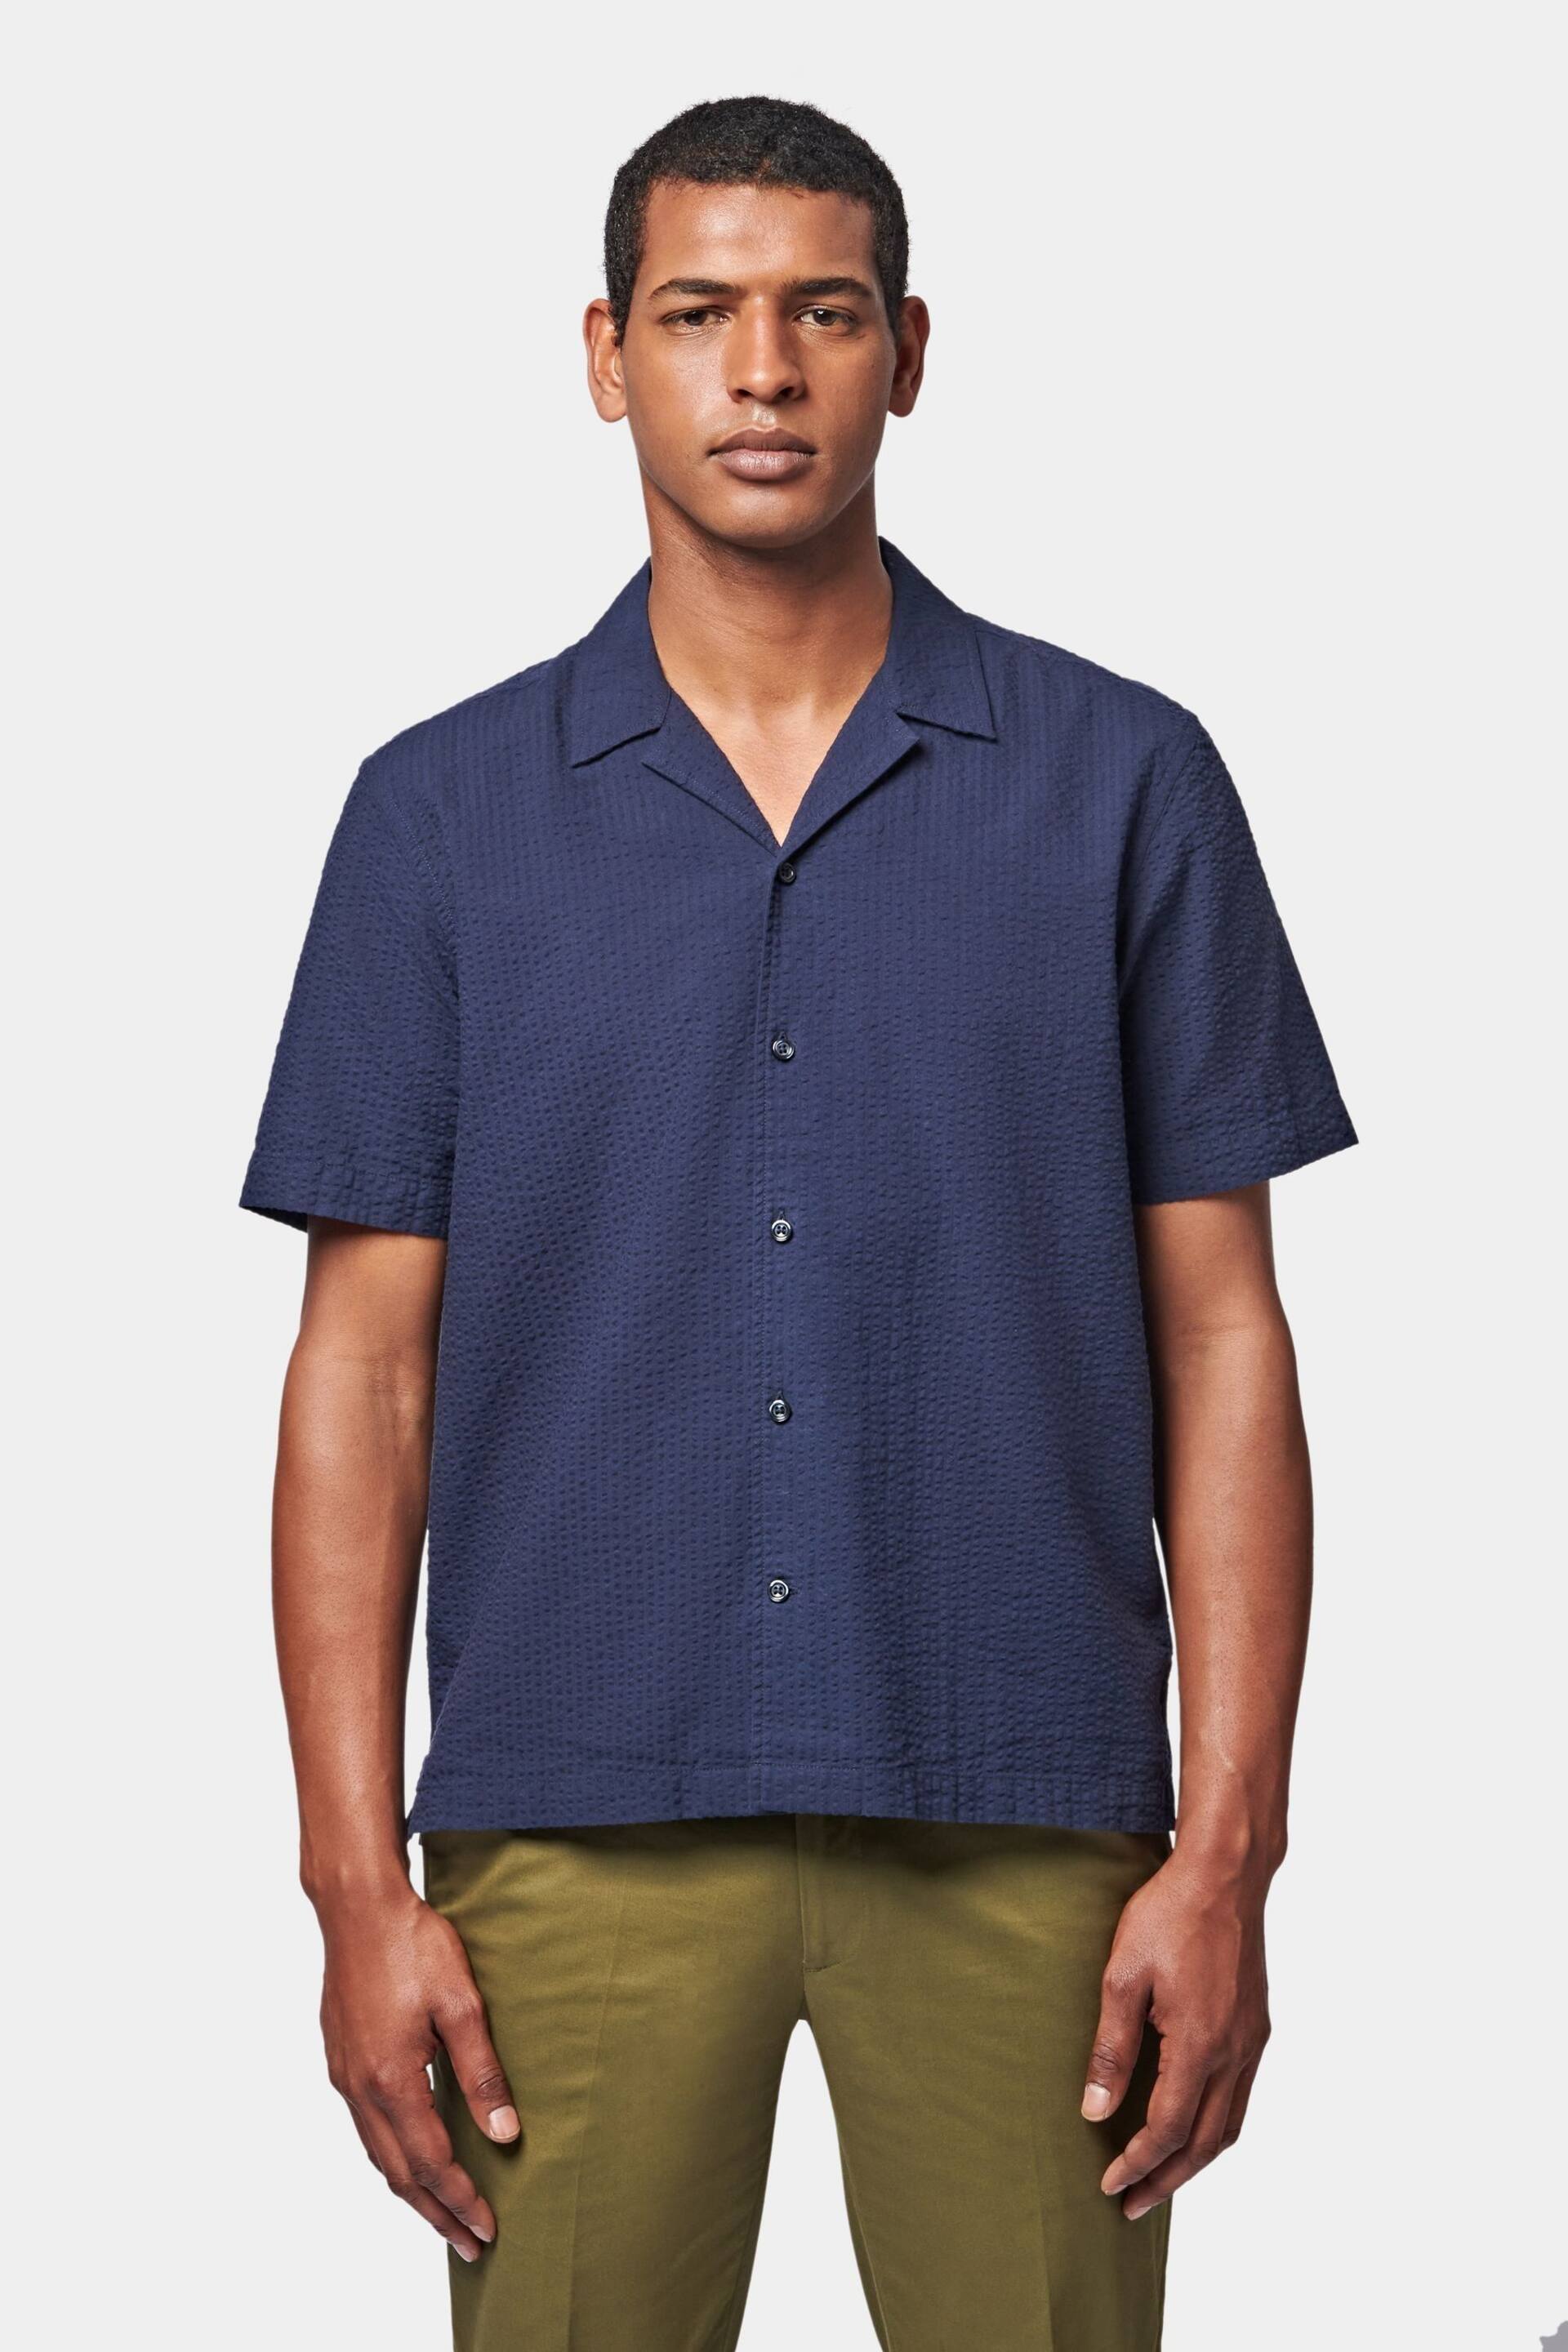 Peckham Rye Revere Collar Seersucker Short Sleeve Shirt - Image 1 of 6